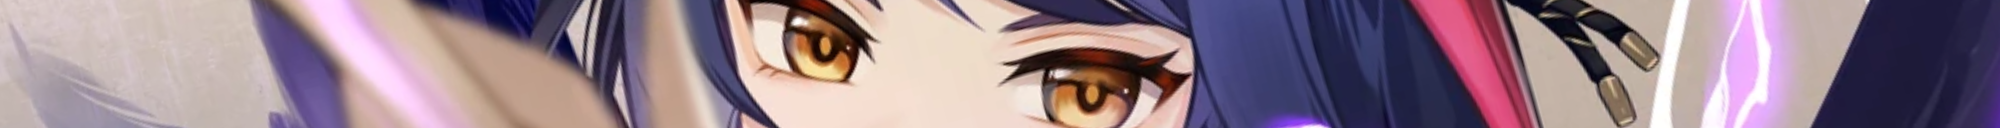 Kujou Sara's eyes - genshin impact